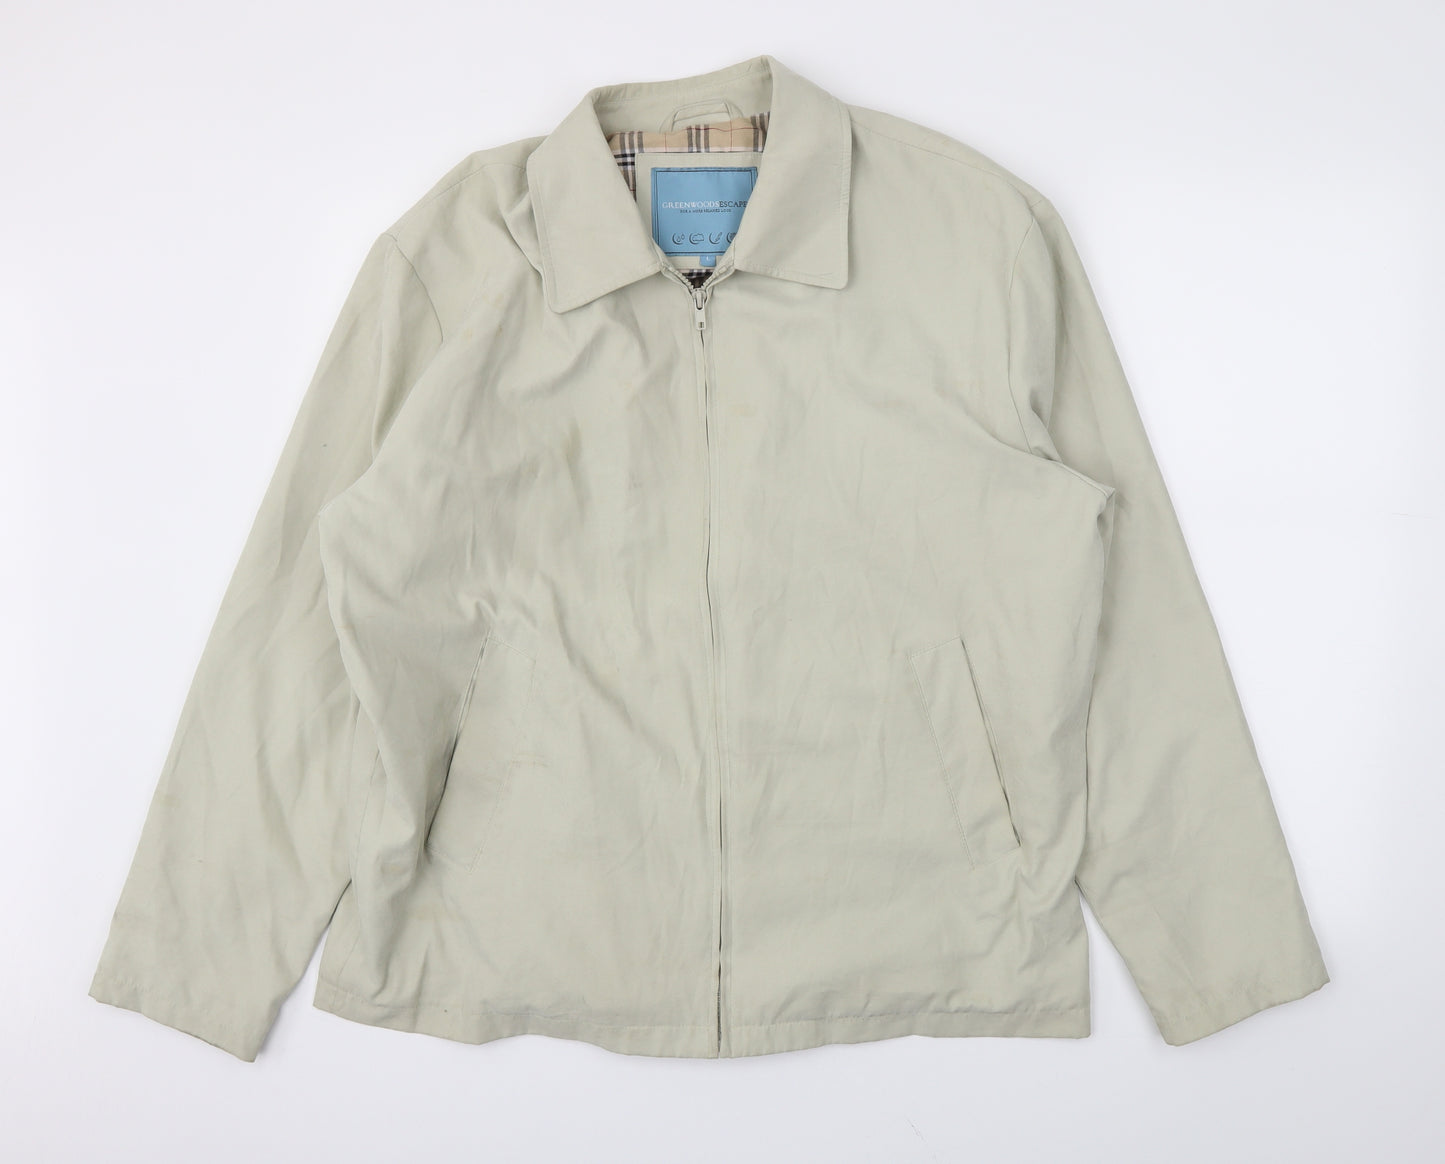 greenwoods Mens Beige   Jacket Coat Size L